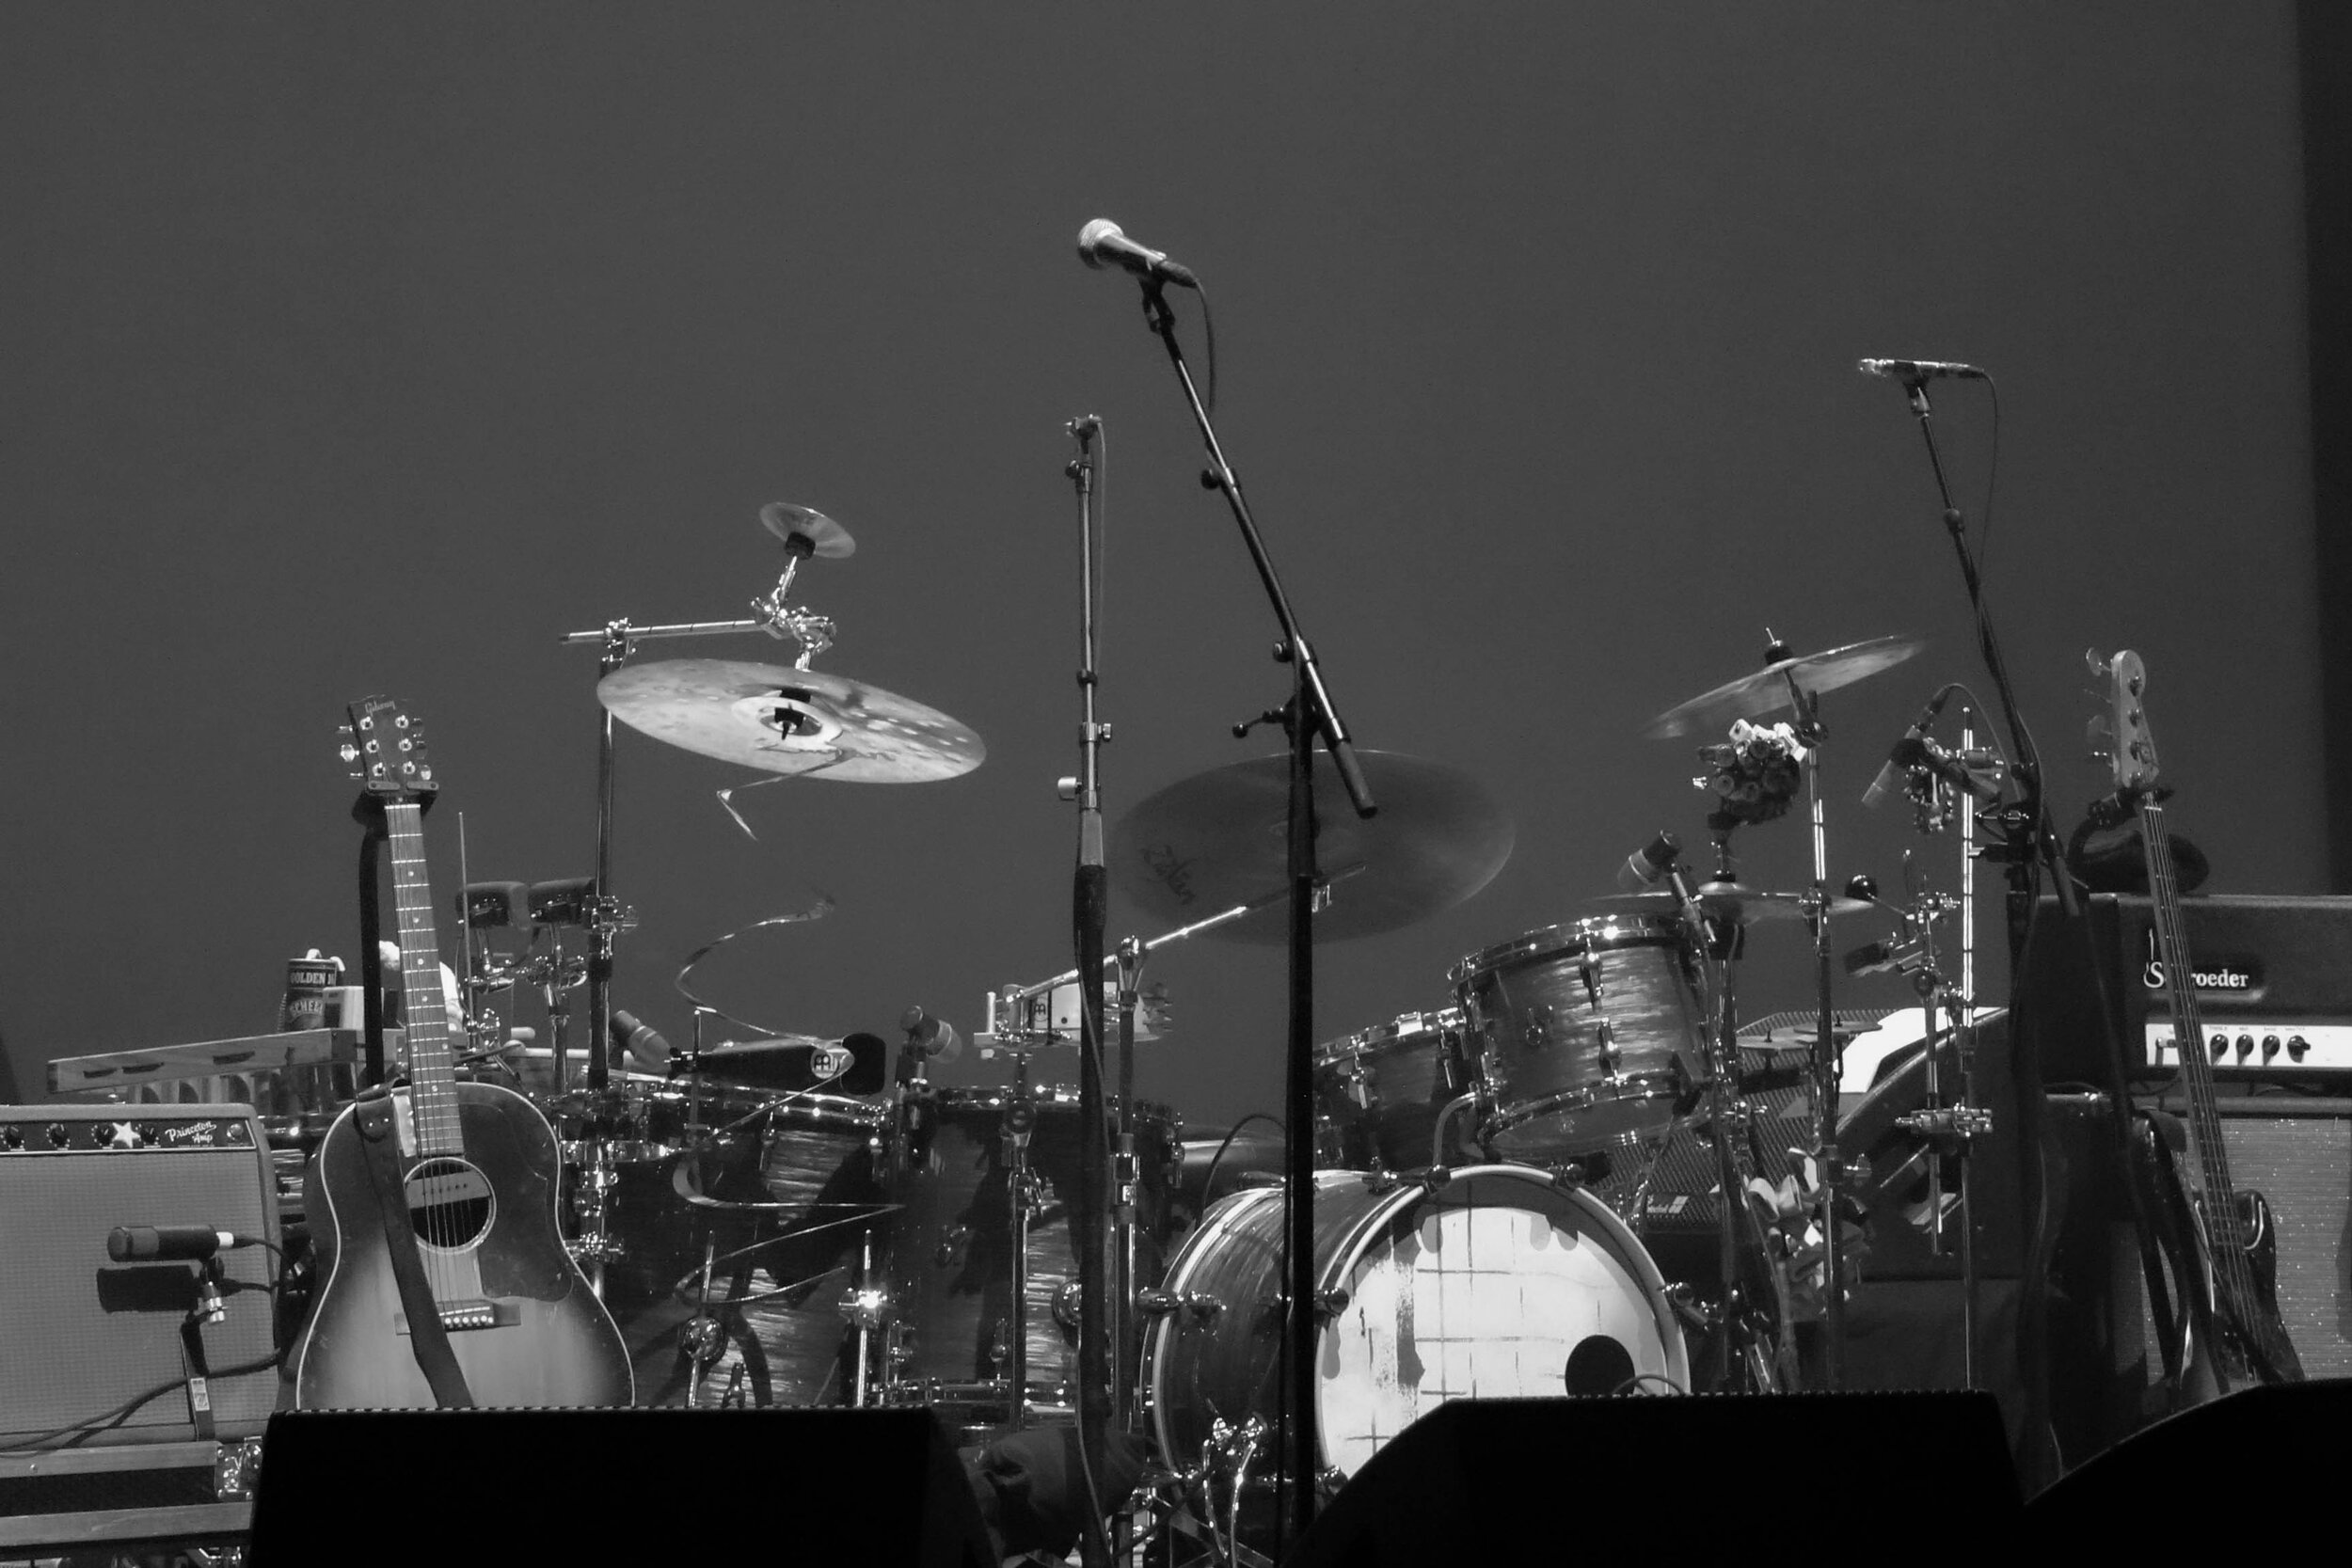 5- (no caption) OR Wilco's instruments.jpg